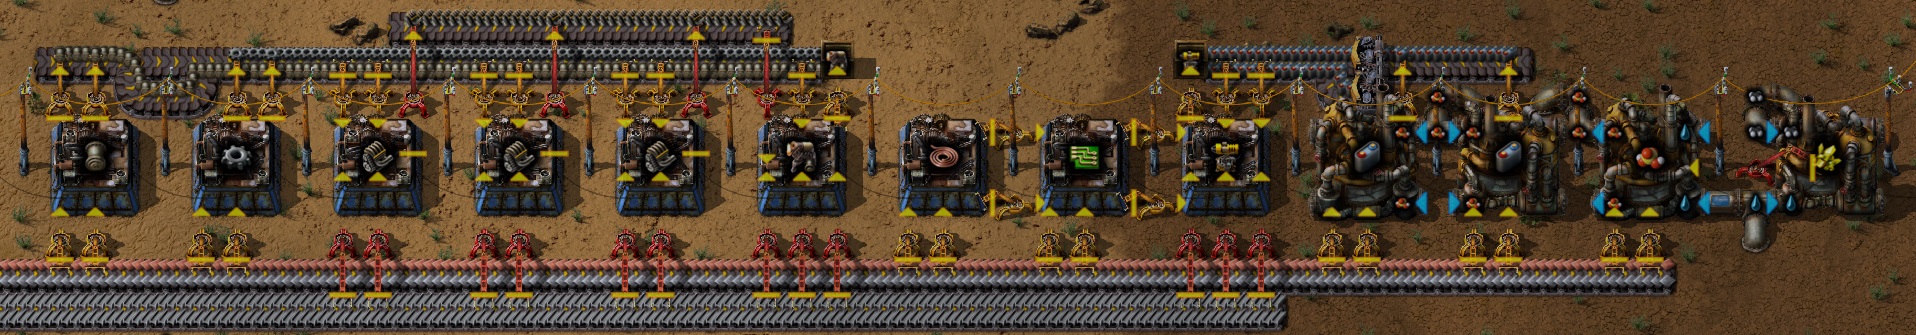 Factorio - Tech Rushing Robot Logistics